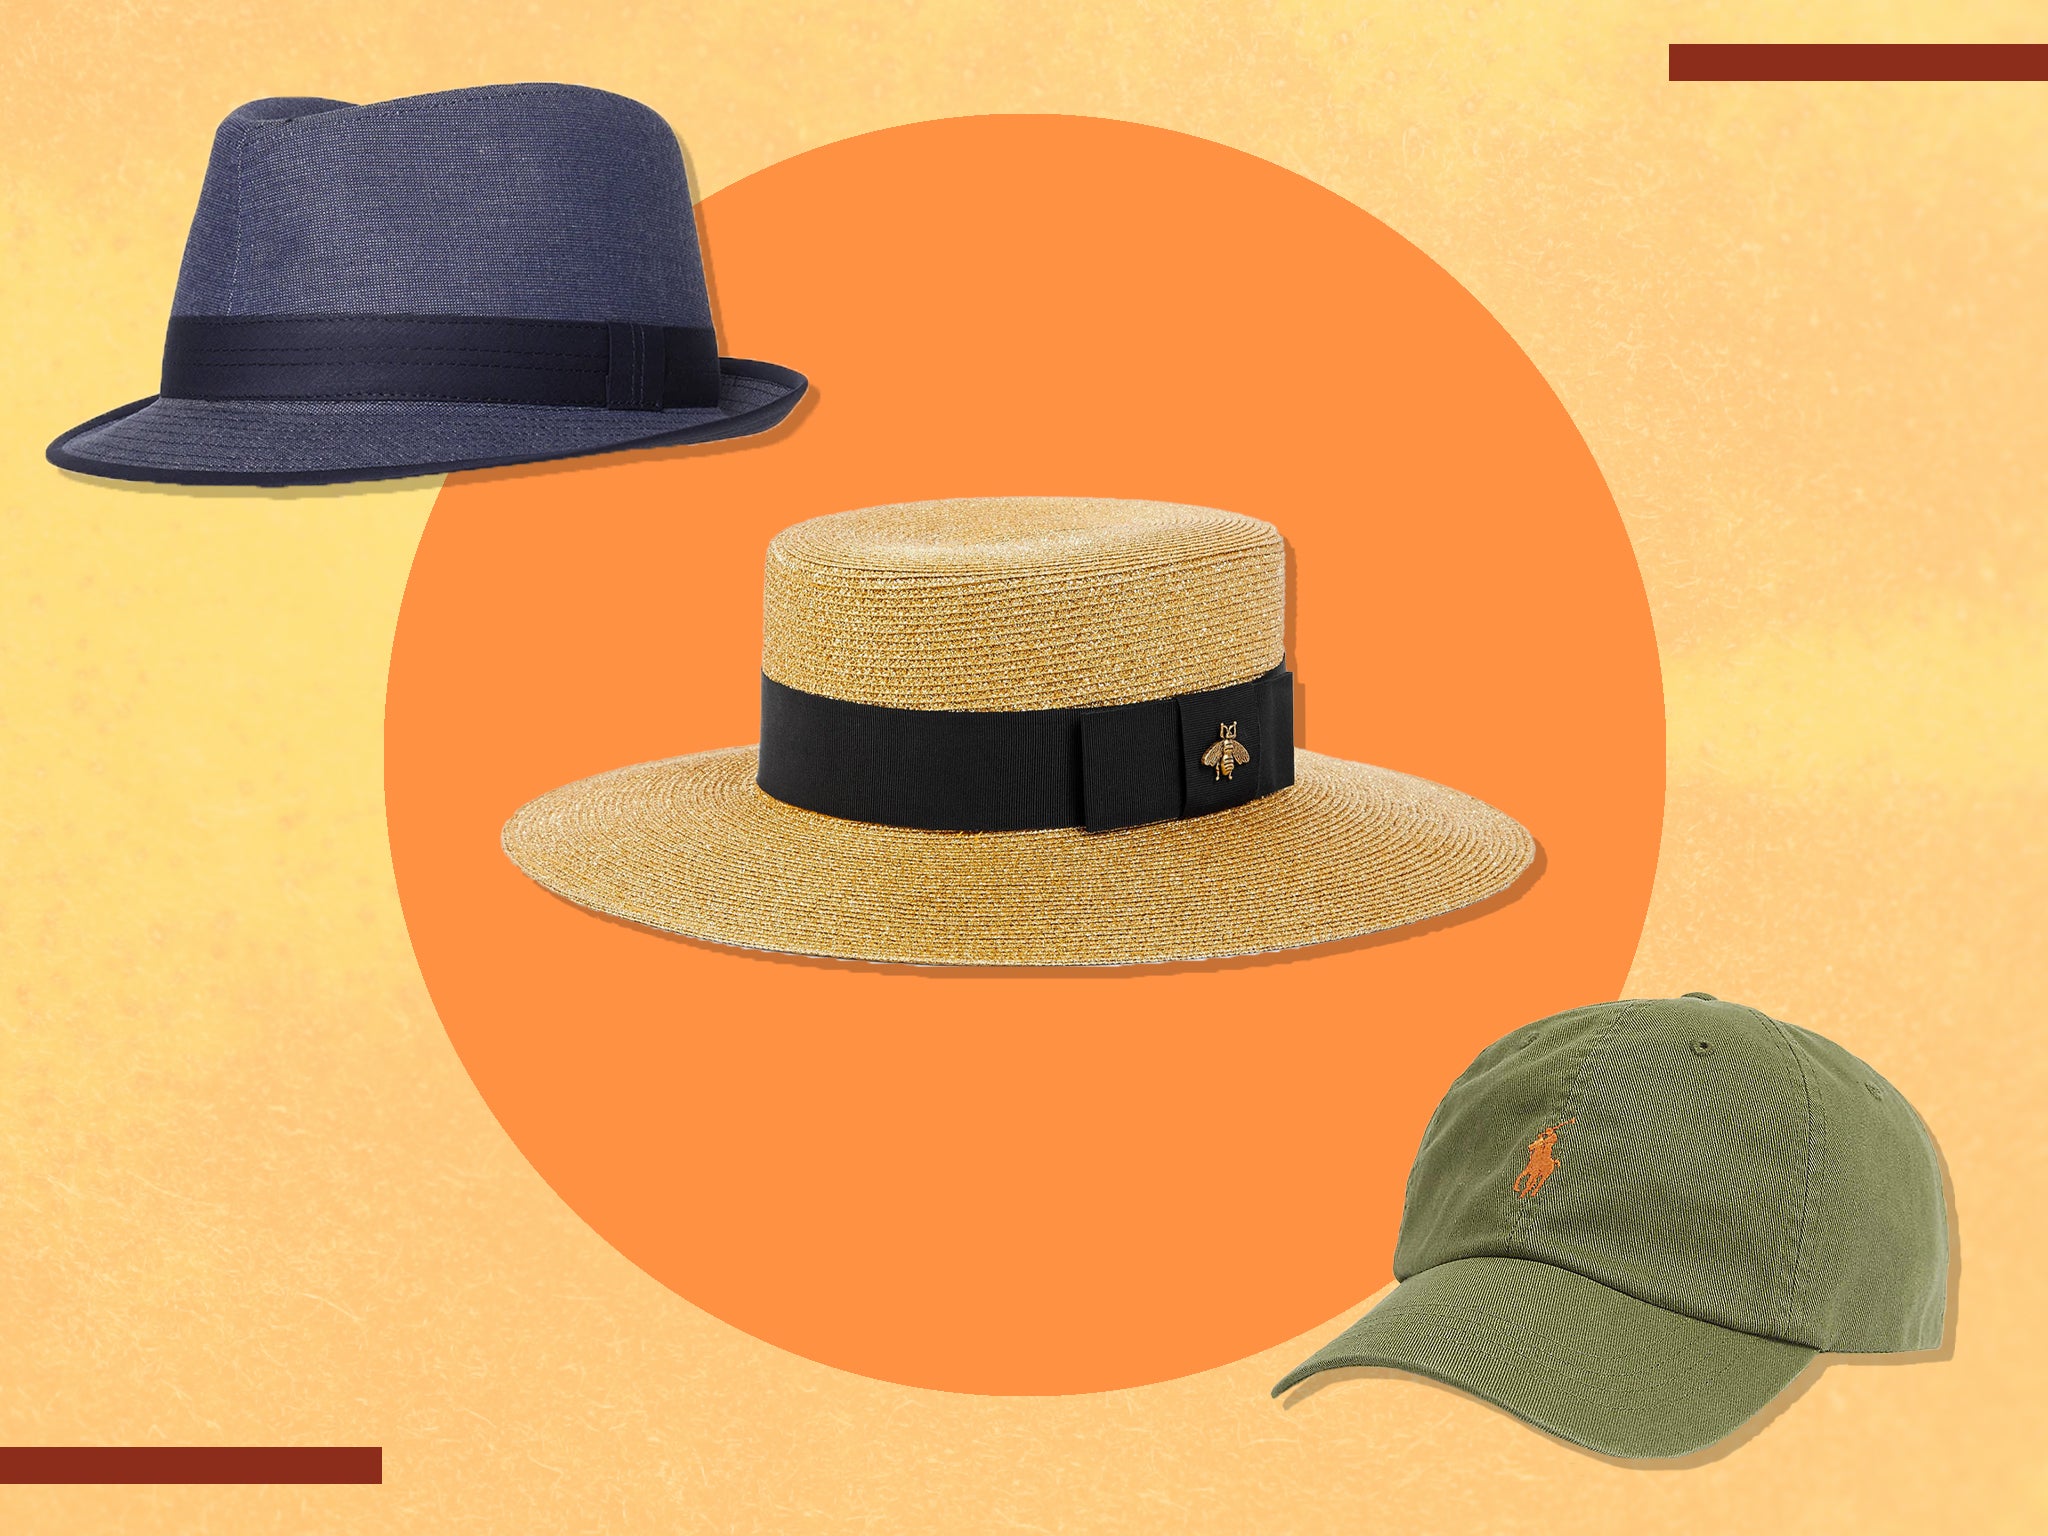 hat for men classic fedora design handmade hat beach hat Fedora hat hat for women panama hat navy-red band straw hat small brim hat